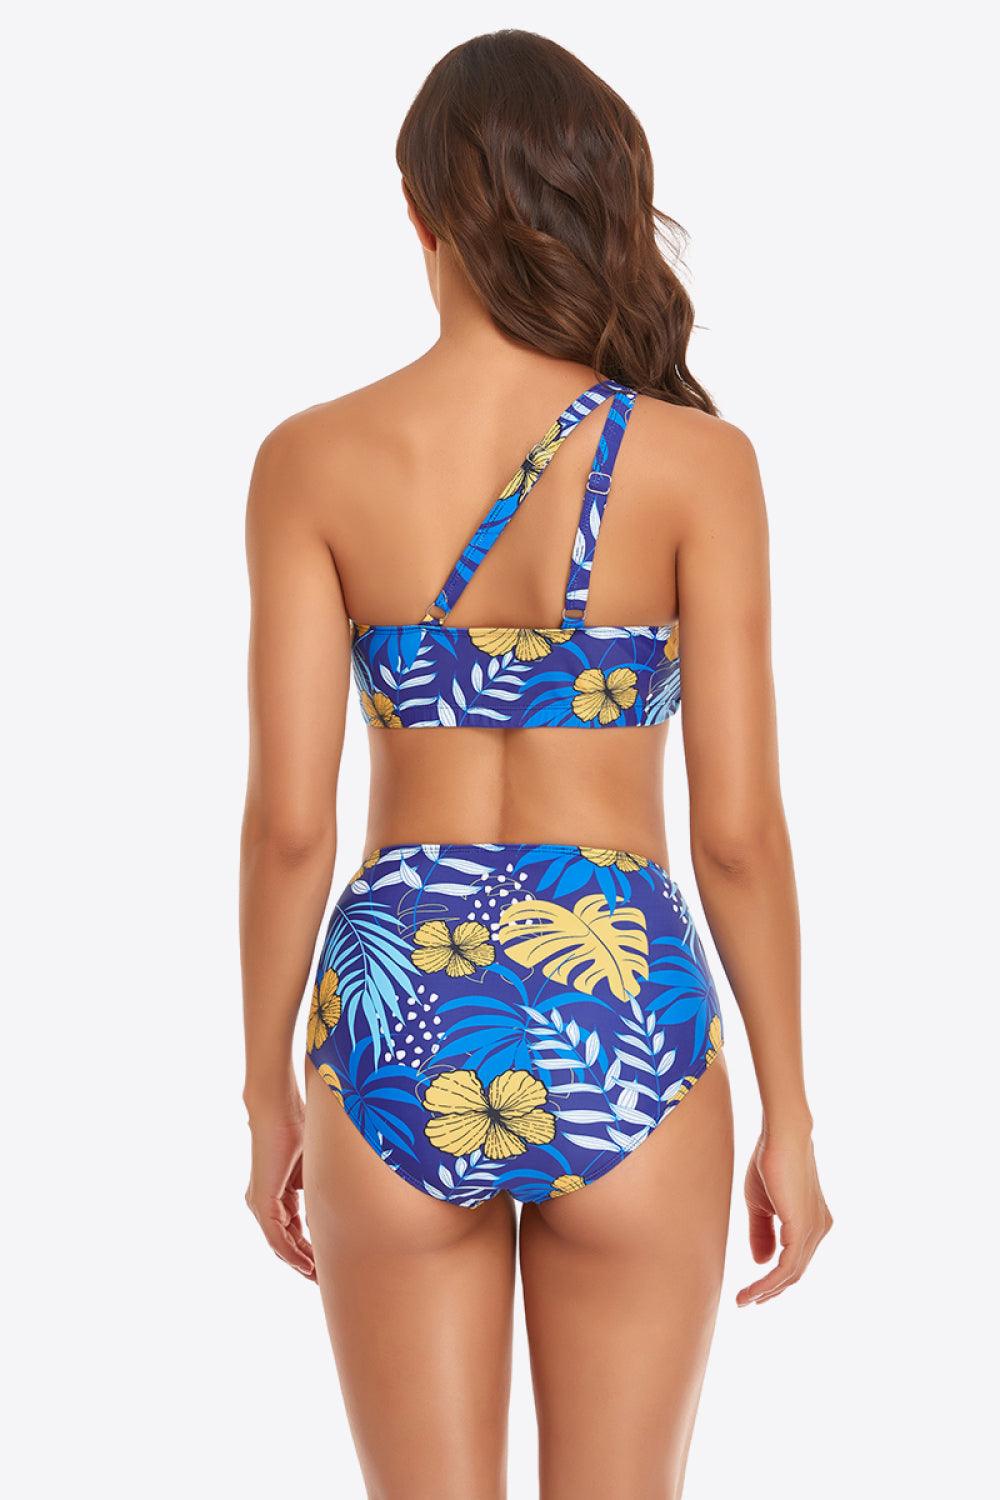 Women's Swimwear - 2PC Ruffled One-Shoulder Buckled Bikini Set